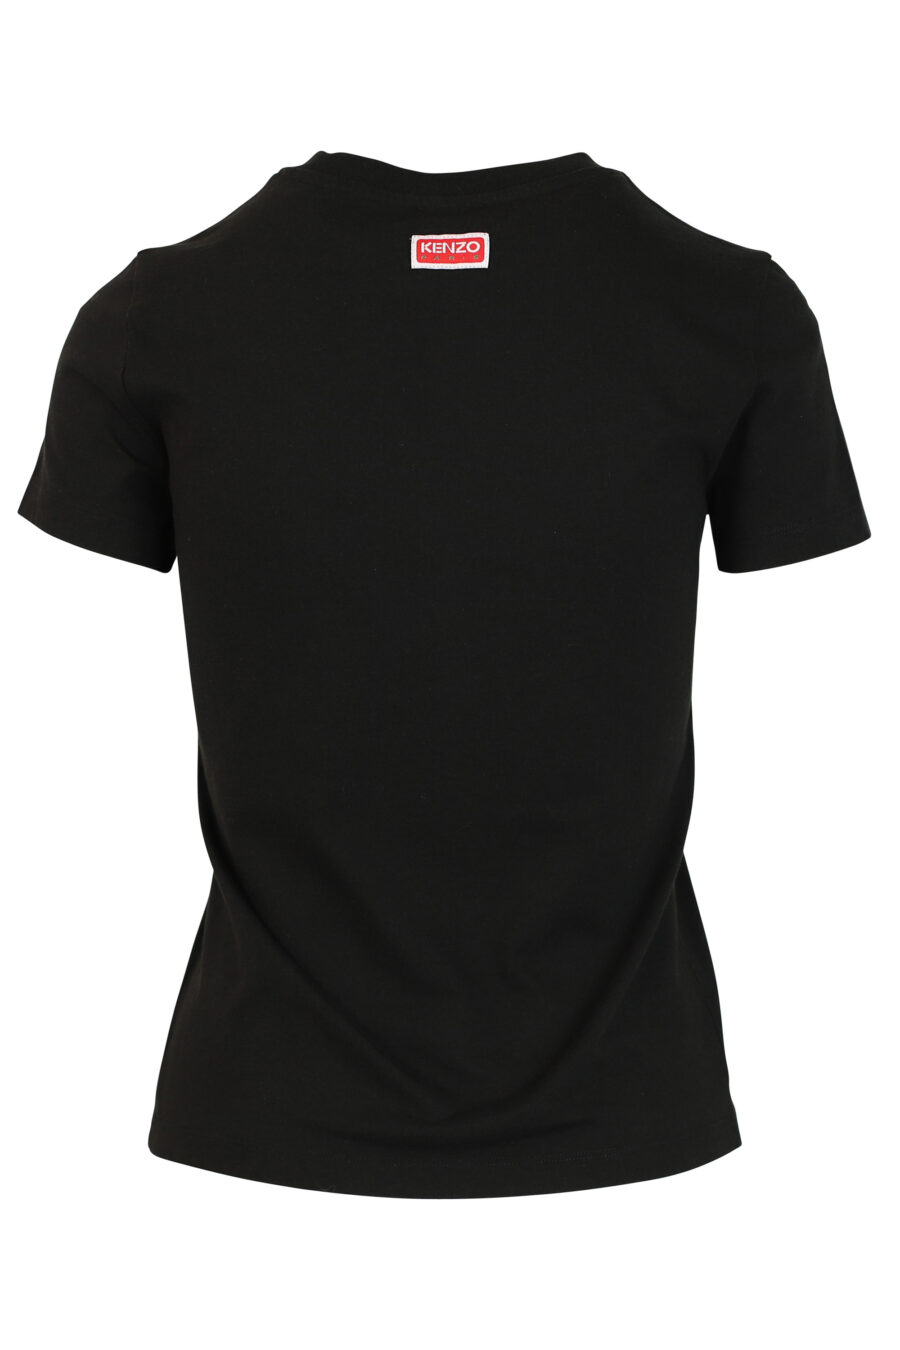 Camiseta negra con maxilogo tigre - 3612230460195 2